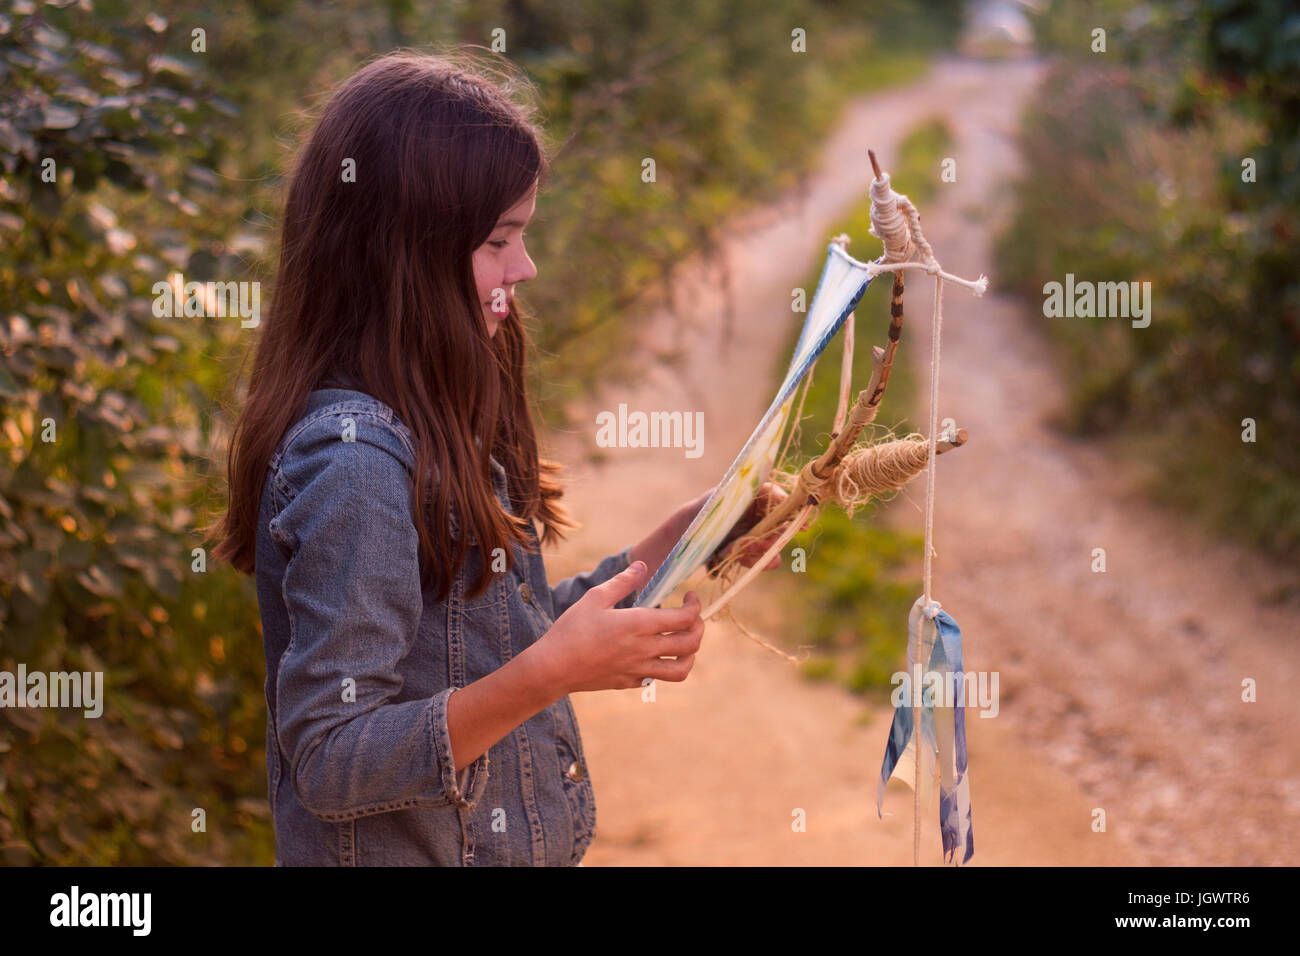 Teenage girl gazing at kite on dirt track Stock Photo